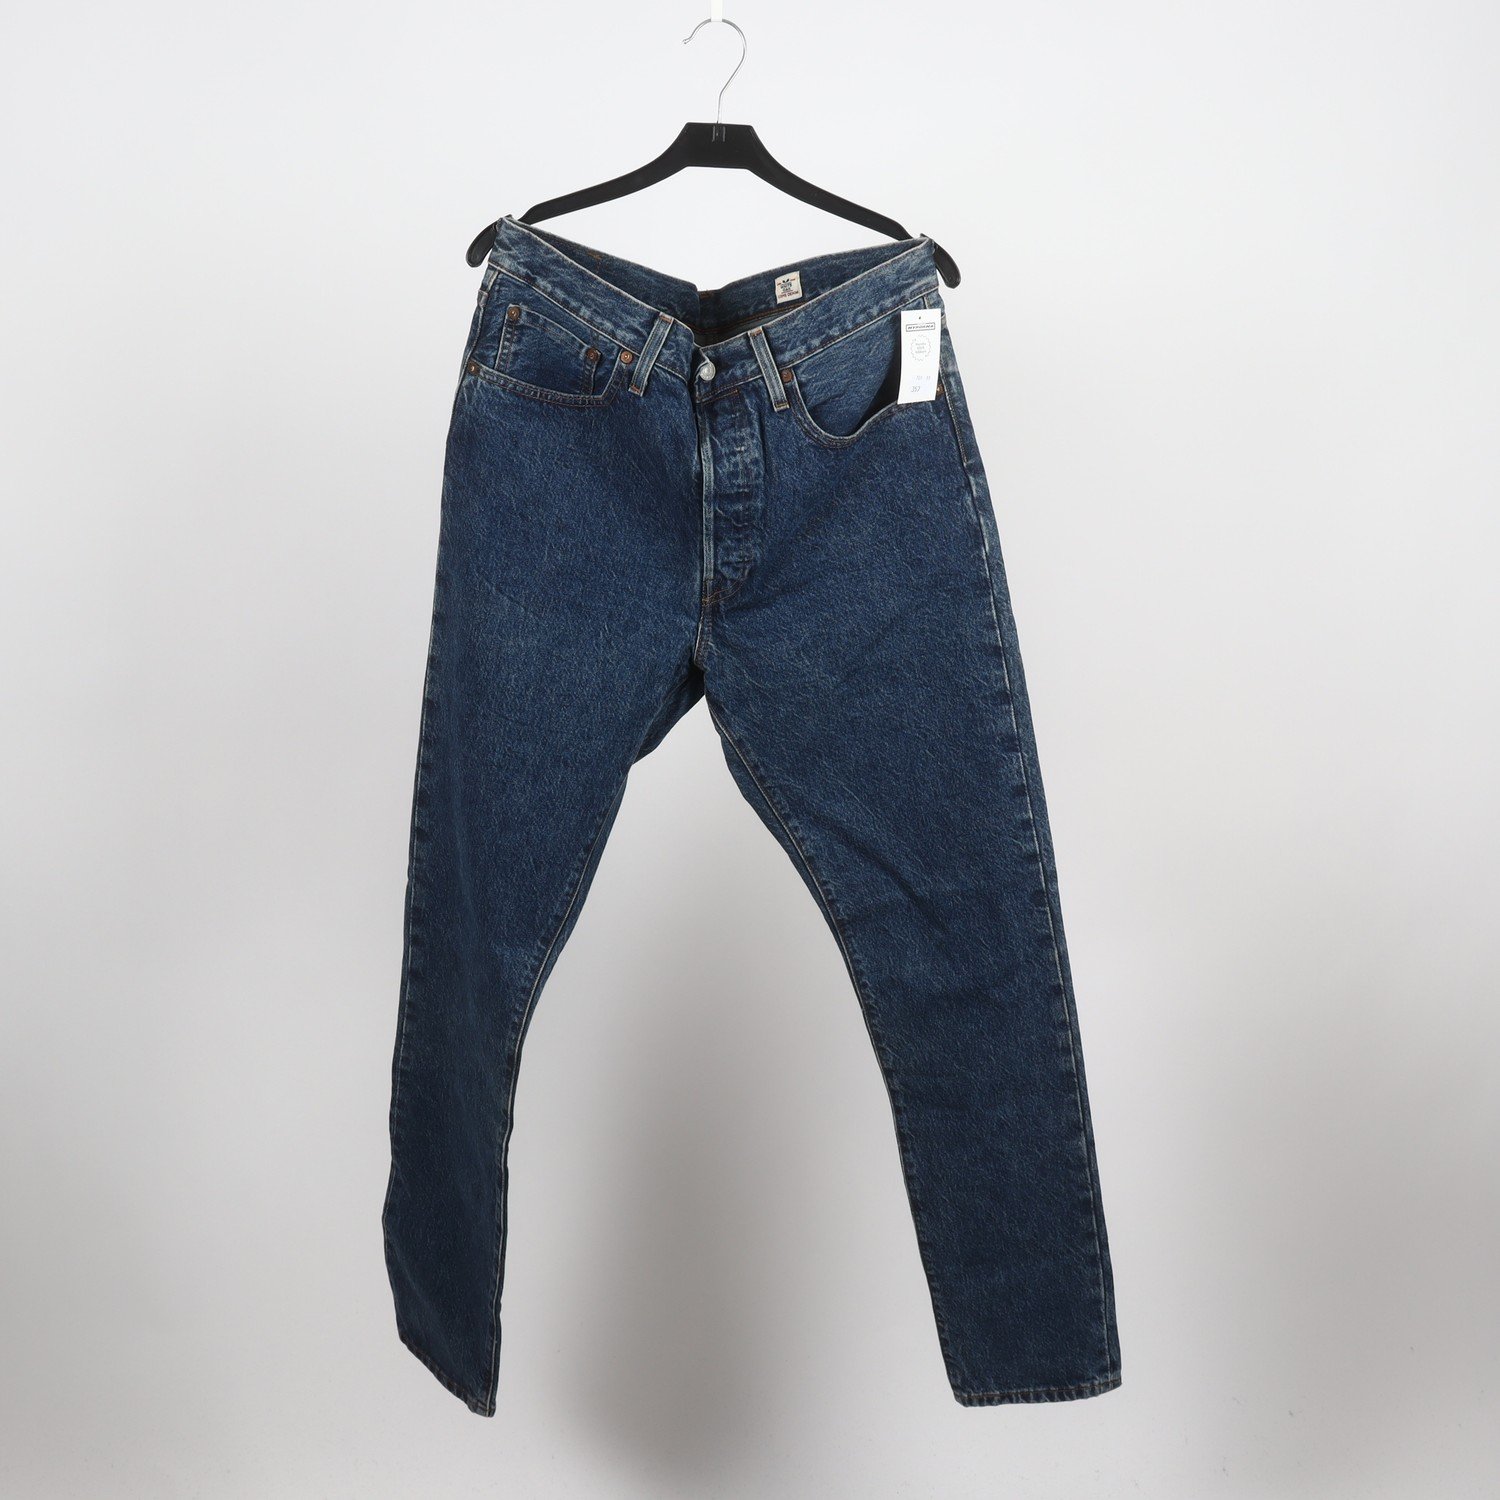 Jeans, Levis 501 White Oak, blå, stl. 31/32